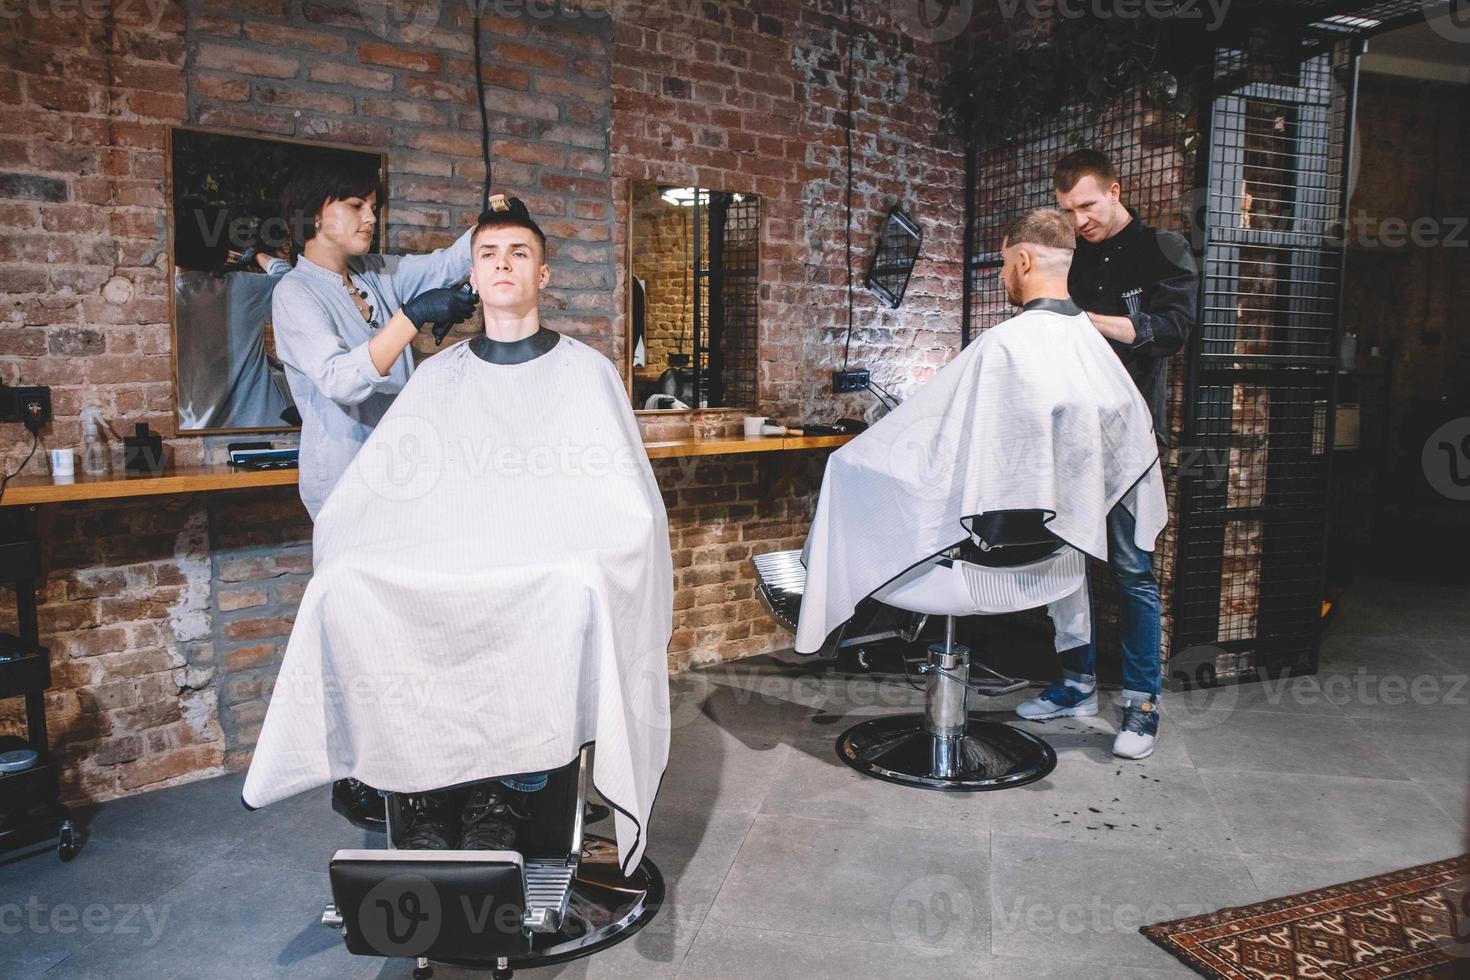 cabeleireiros cortam clientes na barbearia. conceito de publicidade e barbearia foto